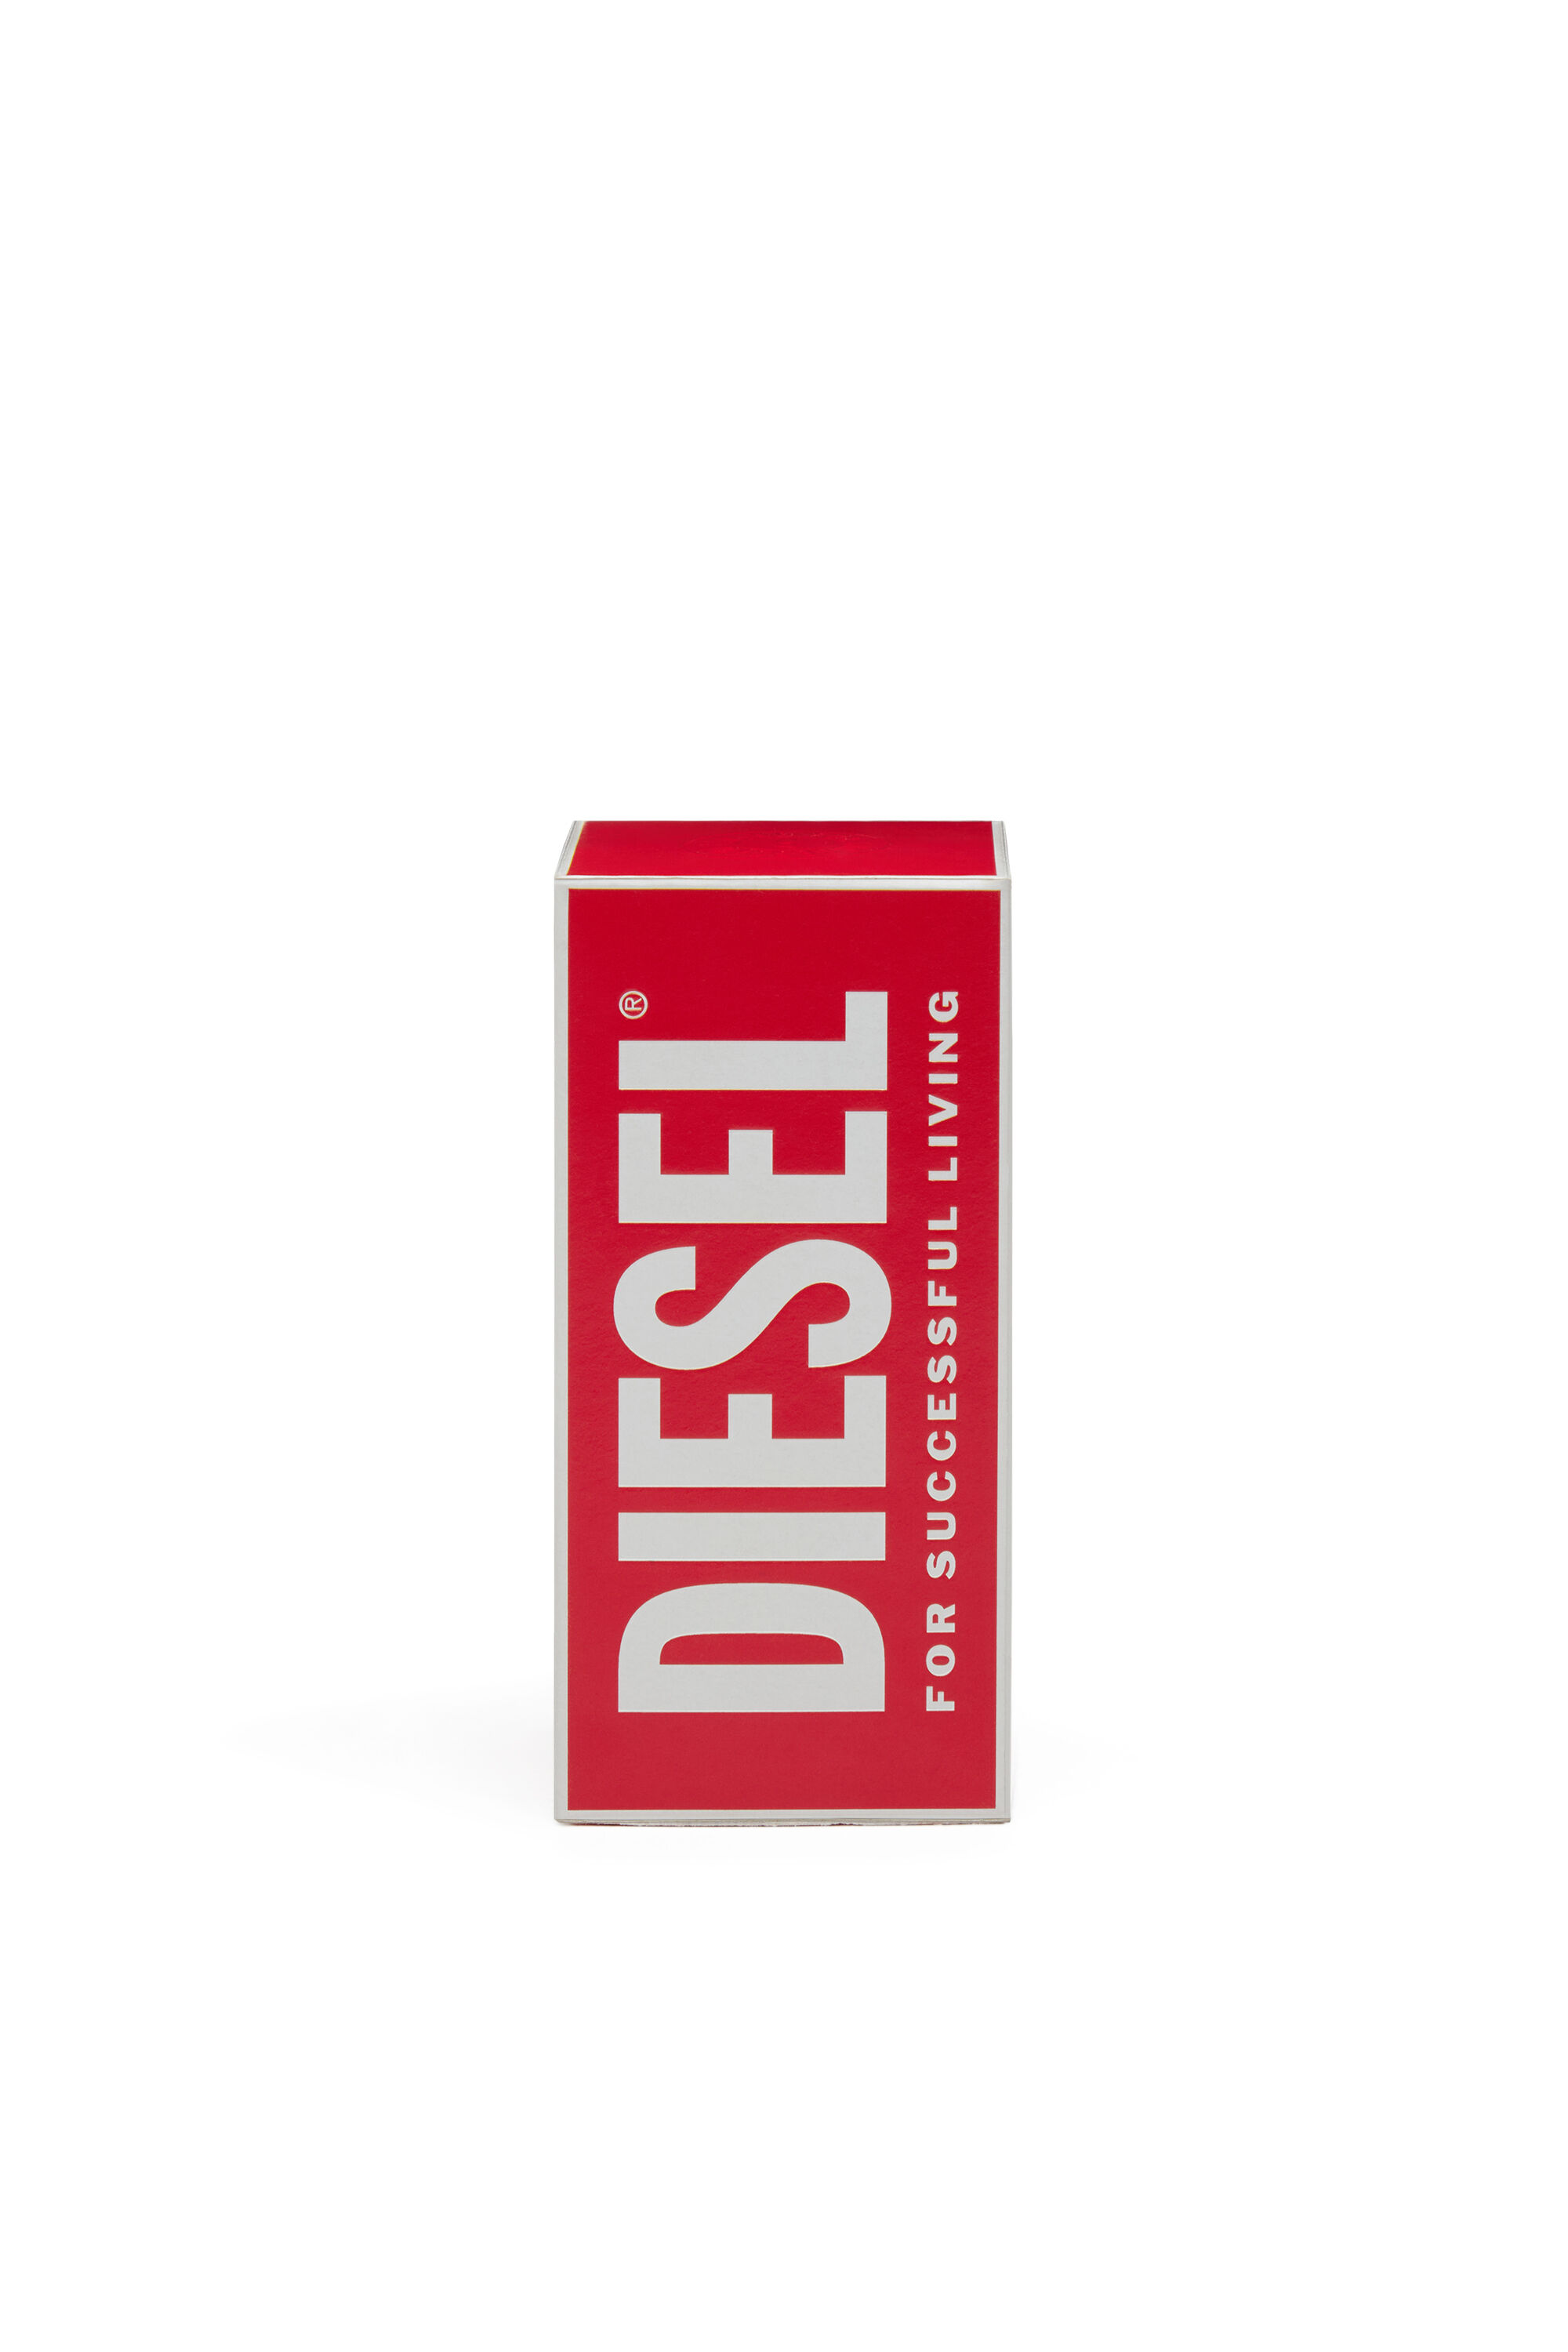 Diesel - D RED 50 ML, Male D RED 50ml, 1.7 FL.OZ., Eau de Parfum in レッド - Image 3